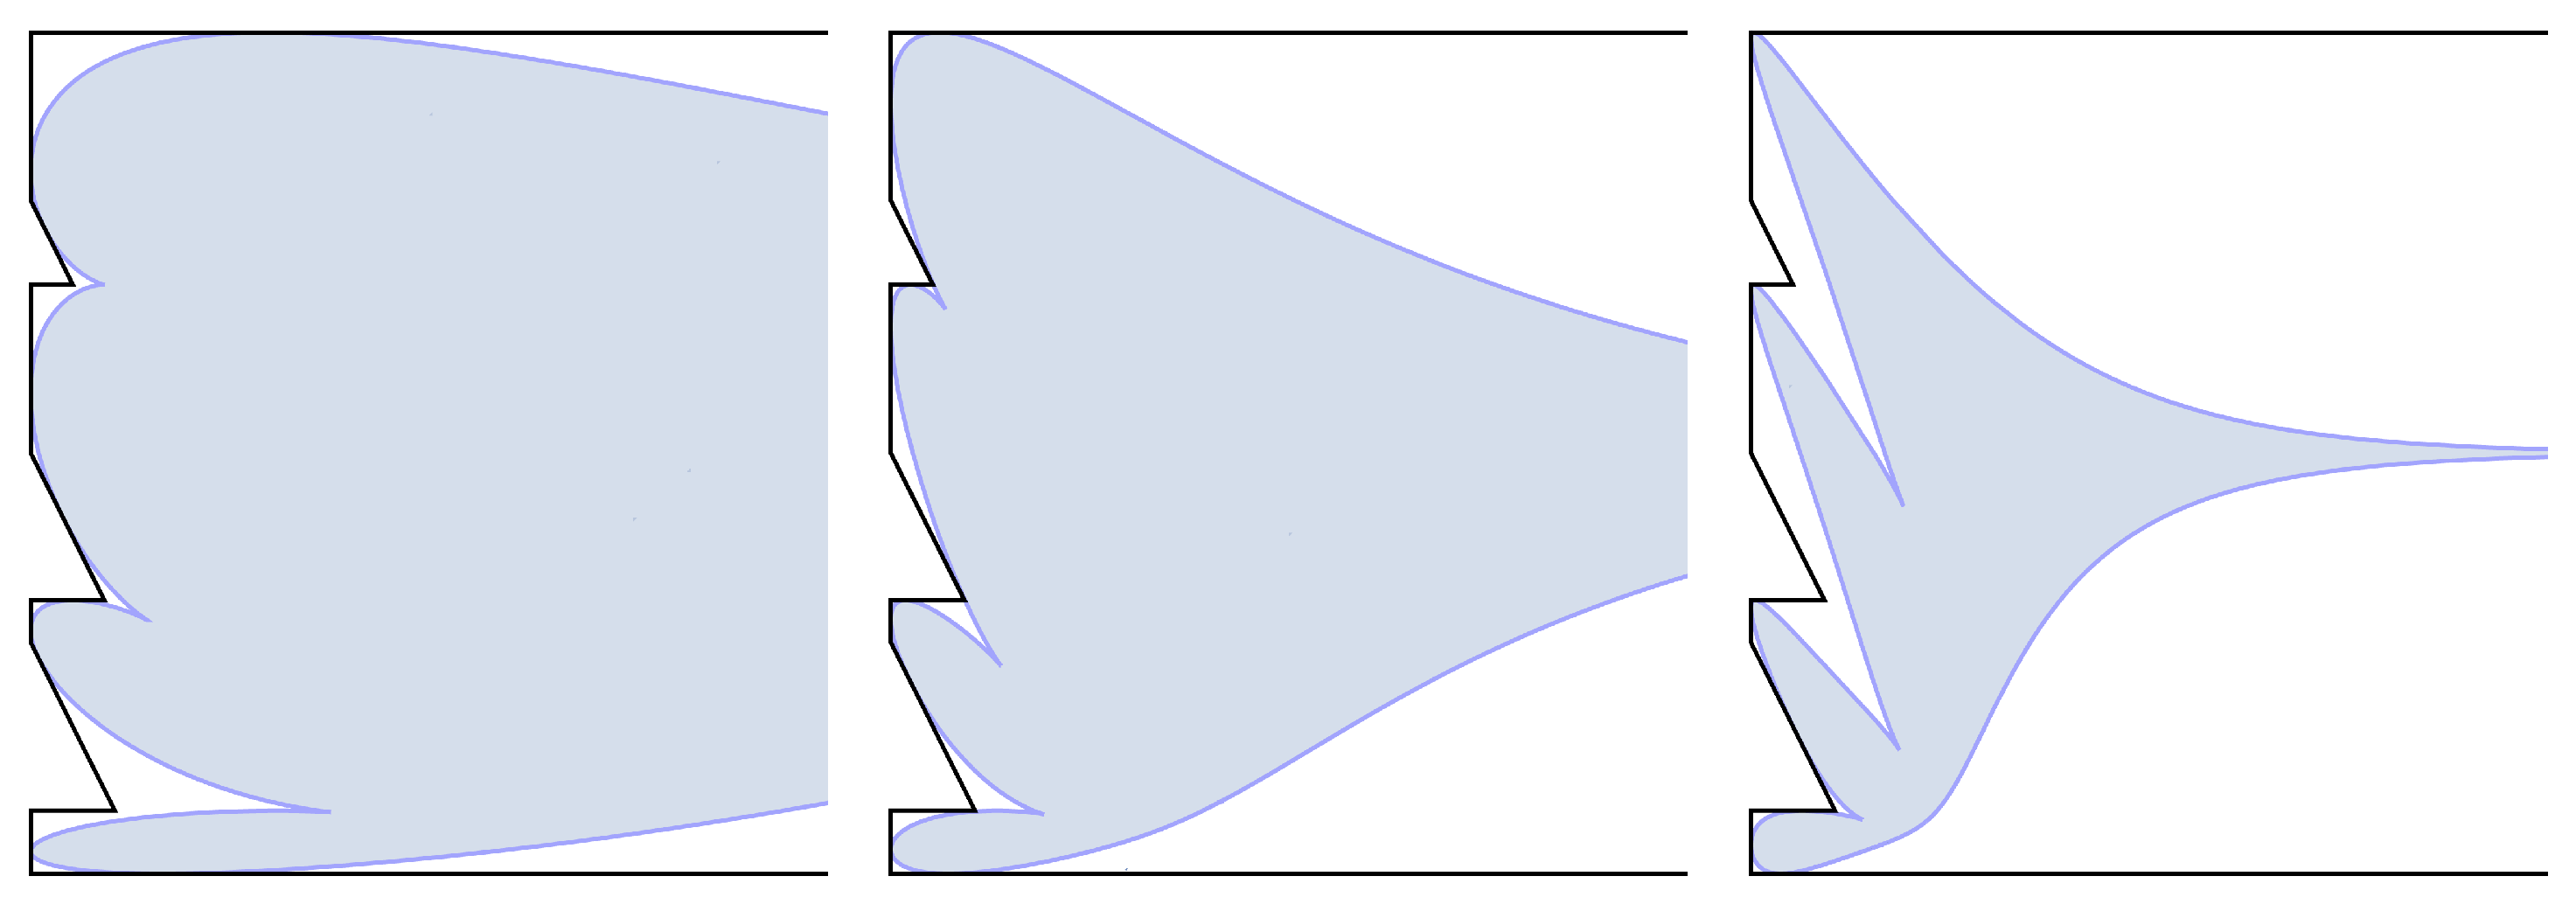 Limit shapes of the noncolliding q-exchangeable random walks